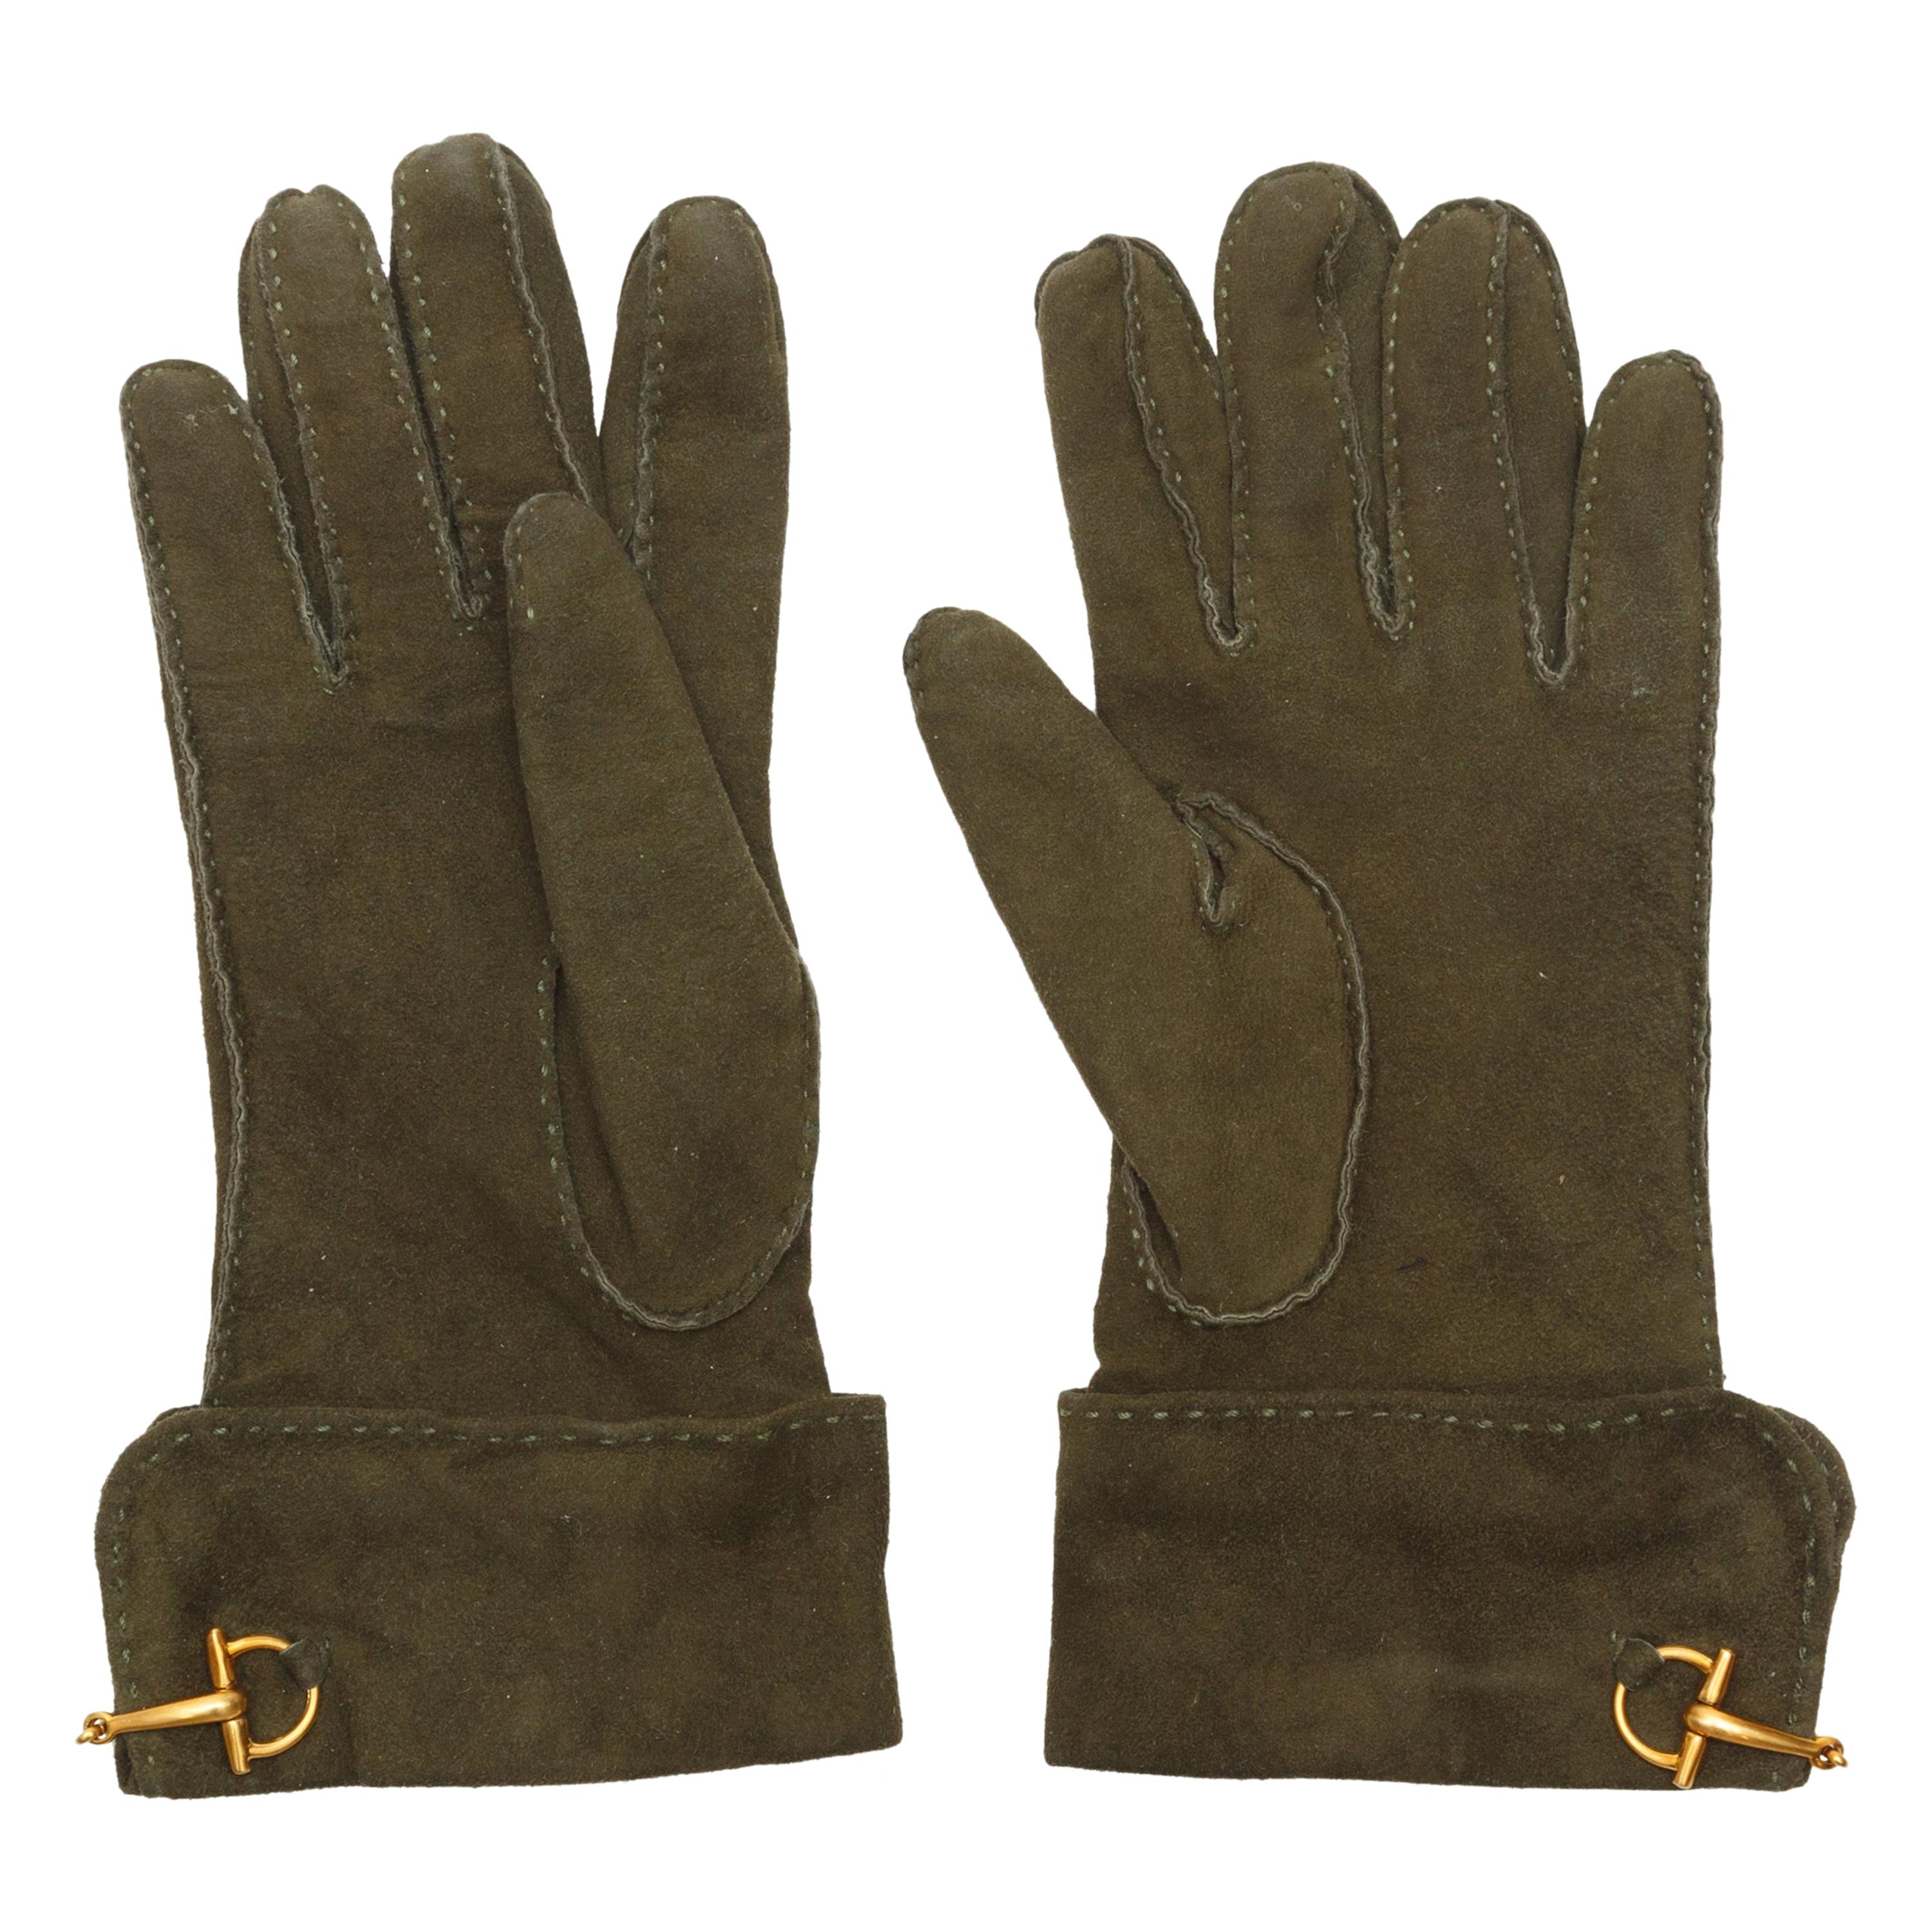 gucci gloves sale